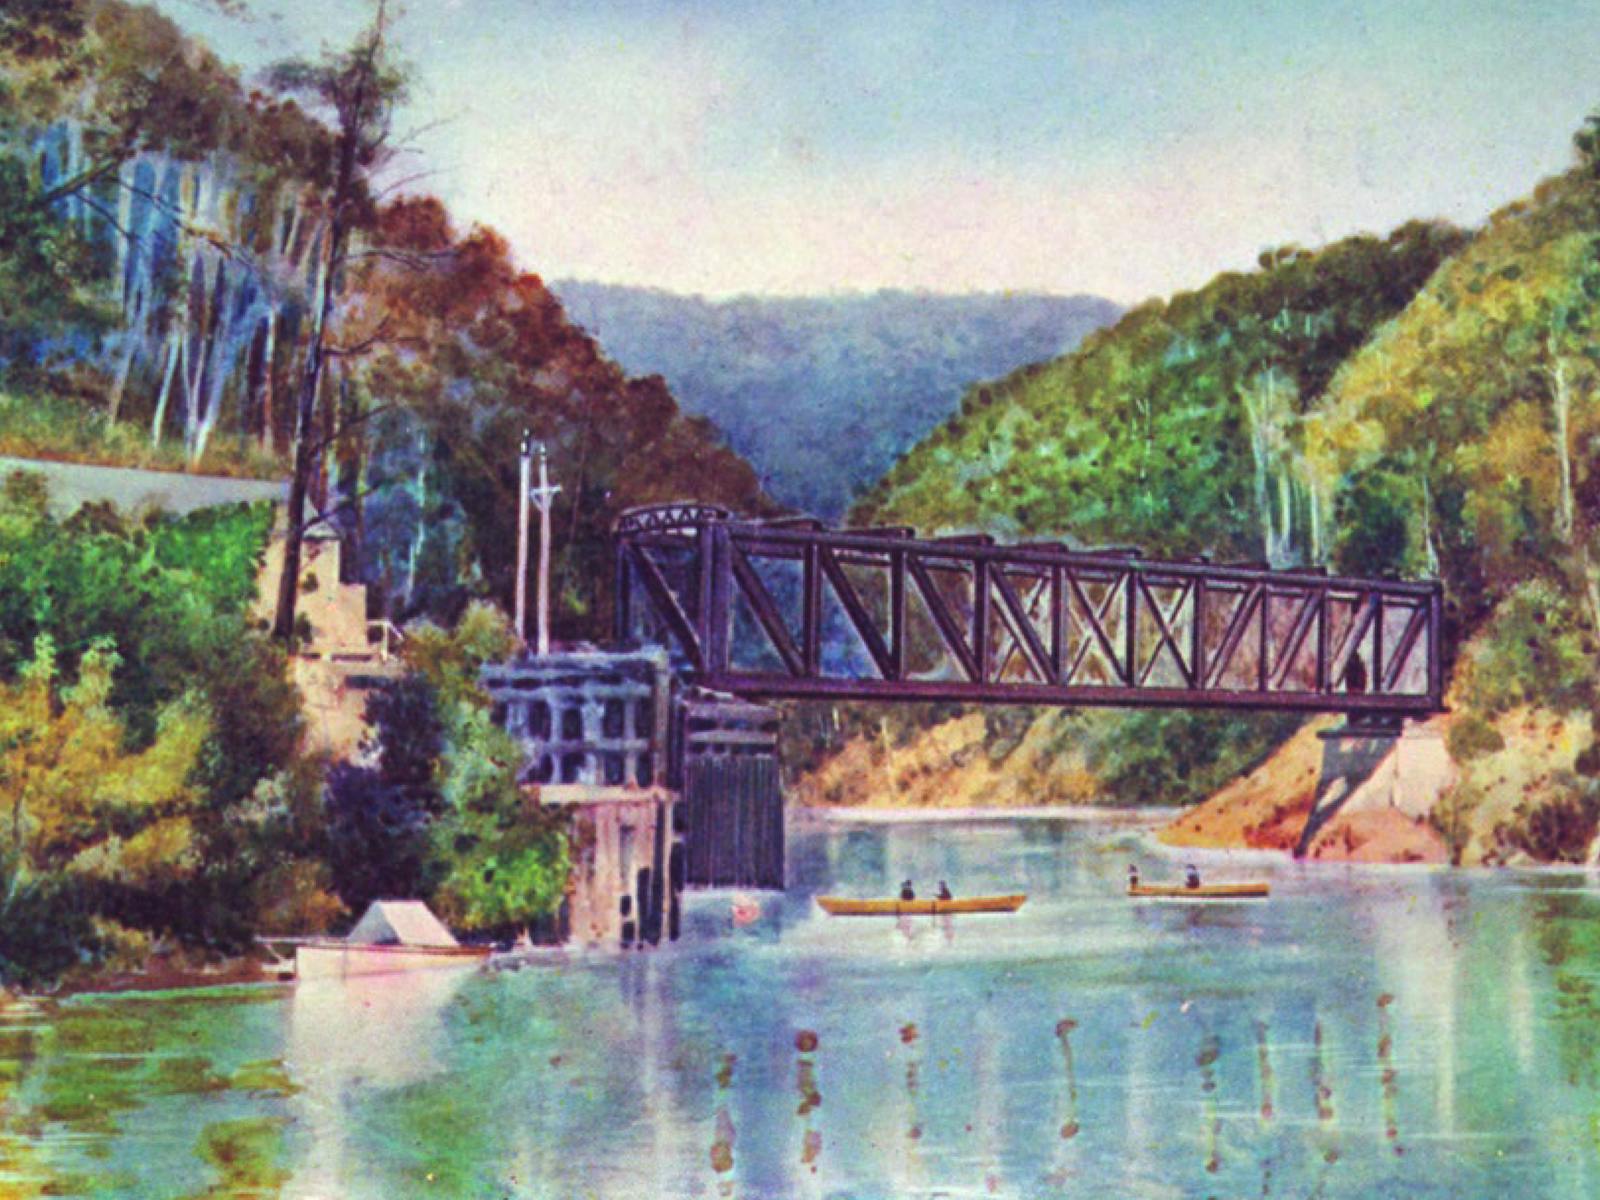 An original early 20th century postcard from Teepookana depicting the Iron Bridge and kayakers